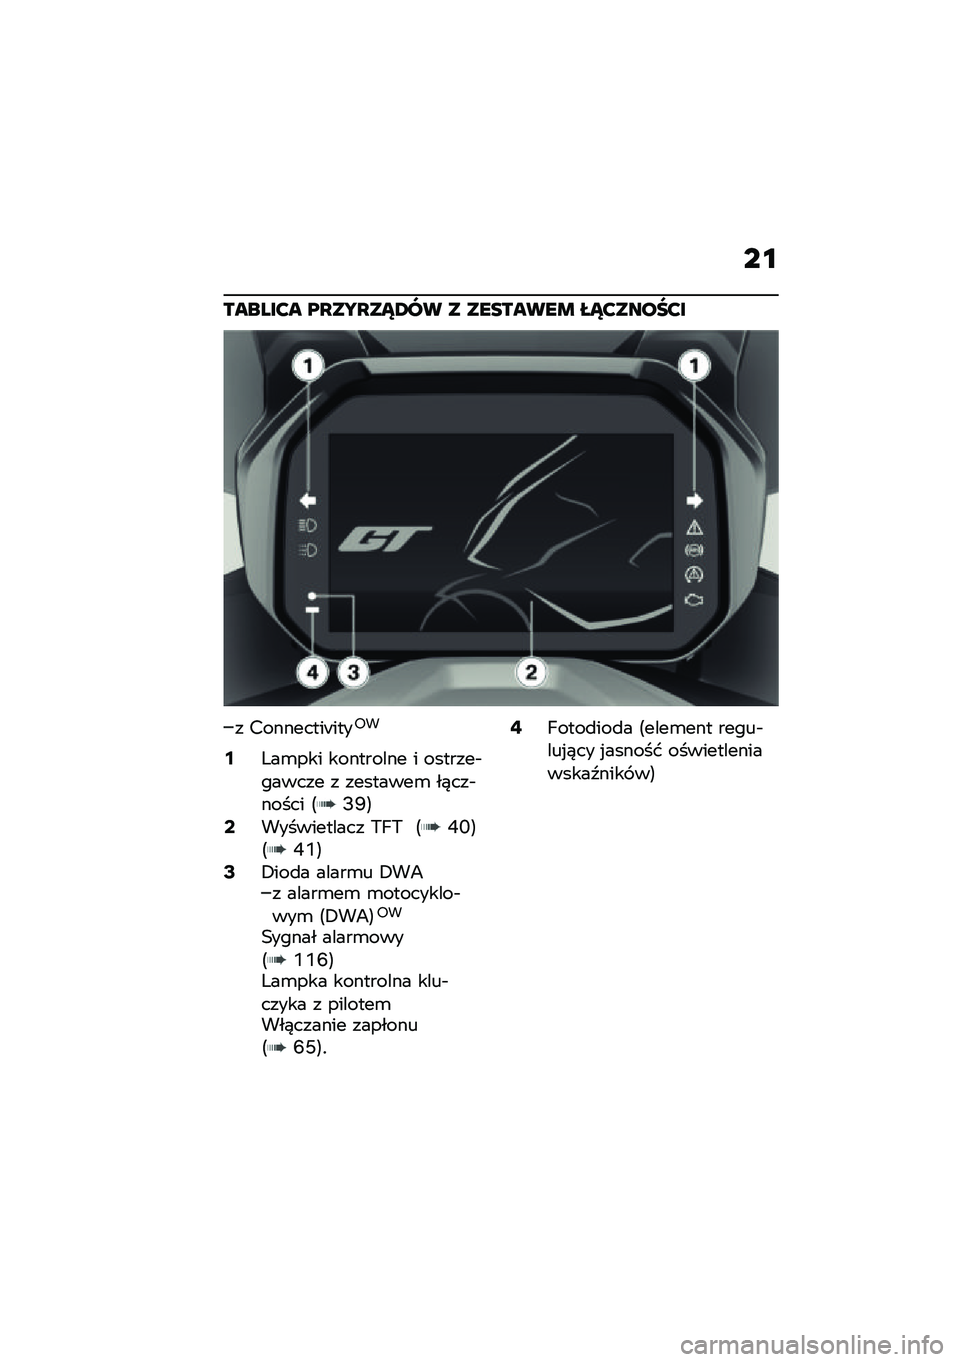 BMW MOTORRAD C 400 GT 2021  Instrukcja obsługi (in Polish) ��\f
������B� ��S��R�S��X�4�� � ��������\b �M�X�B����O�B�
� ���������F����;�
�6�Y��\b��� ��������� � �������$������ � ��������\b 